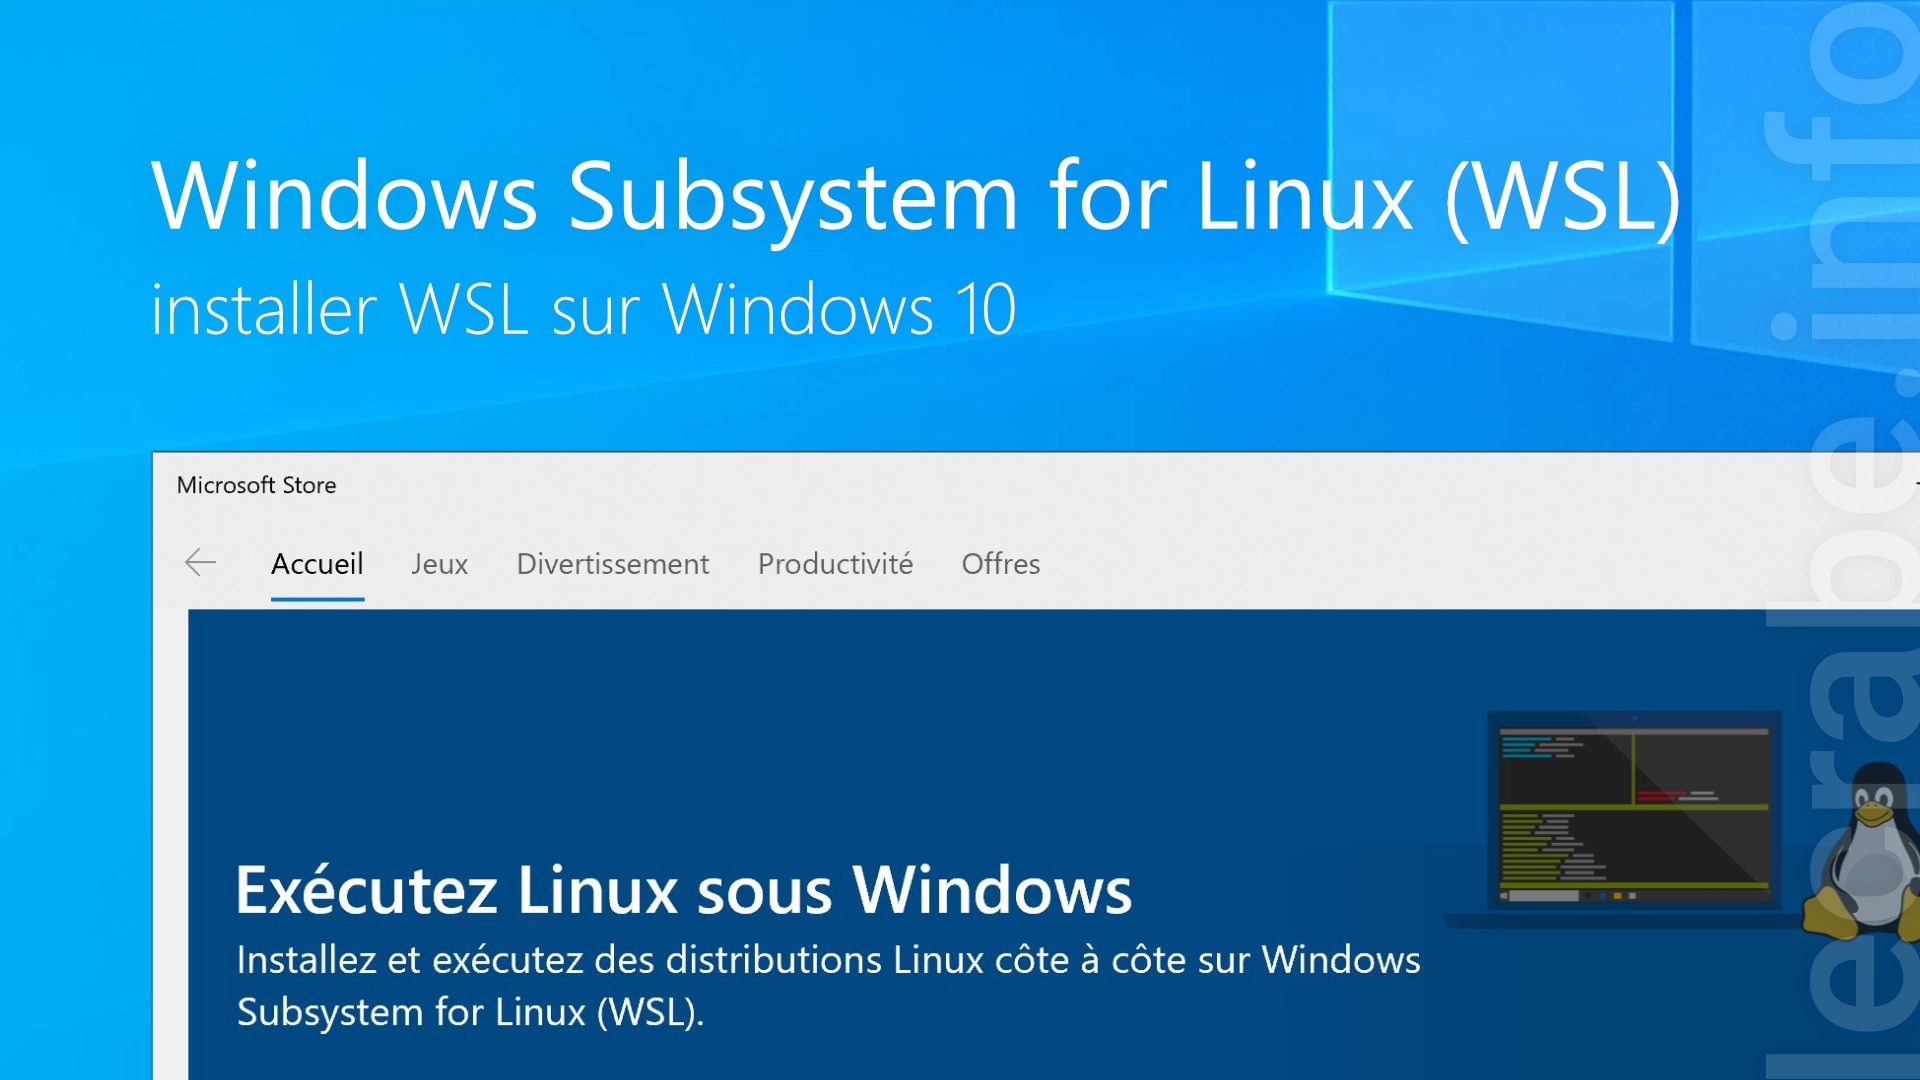 installer-wsl-windows-subsystem-for-linux-sur-windows-10-5ed8ce0c5bd2e.jpg